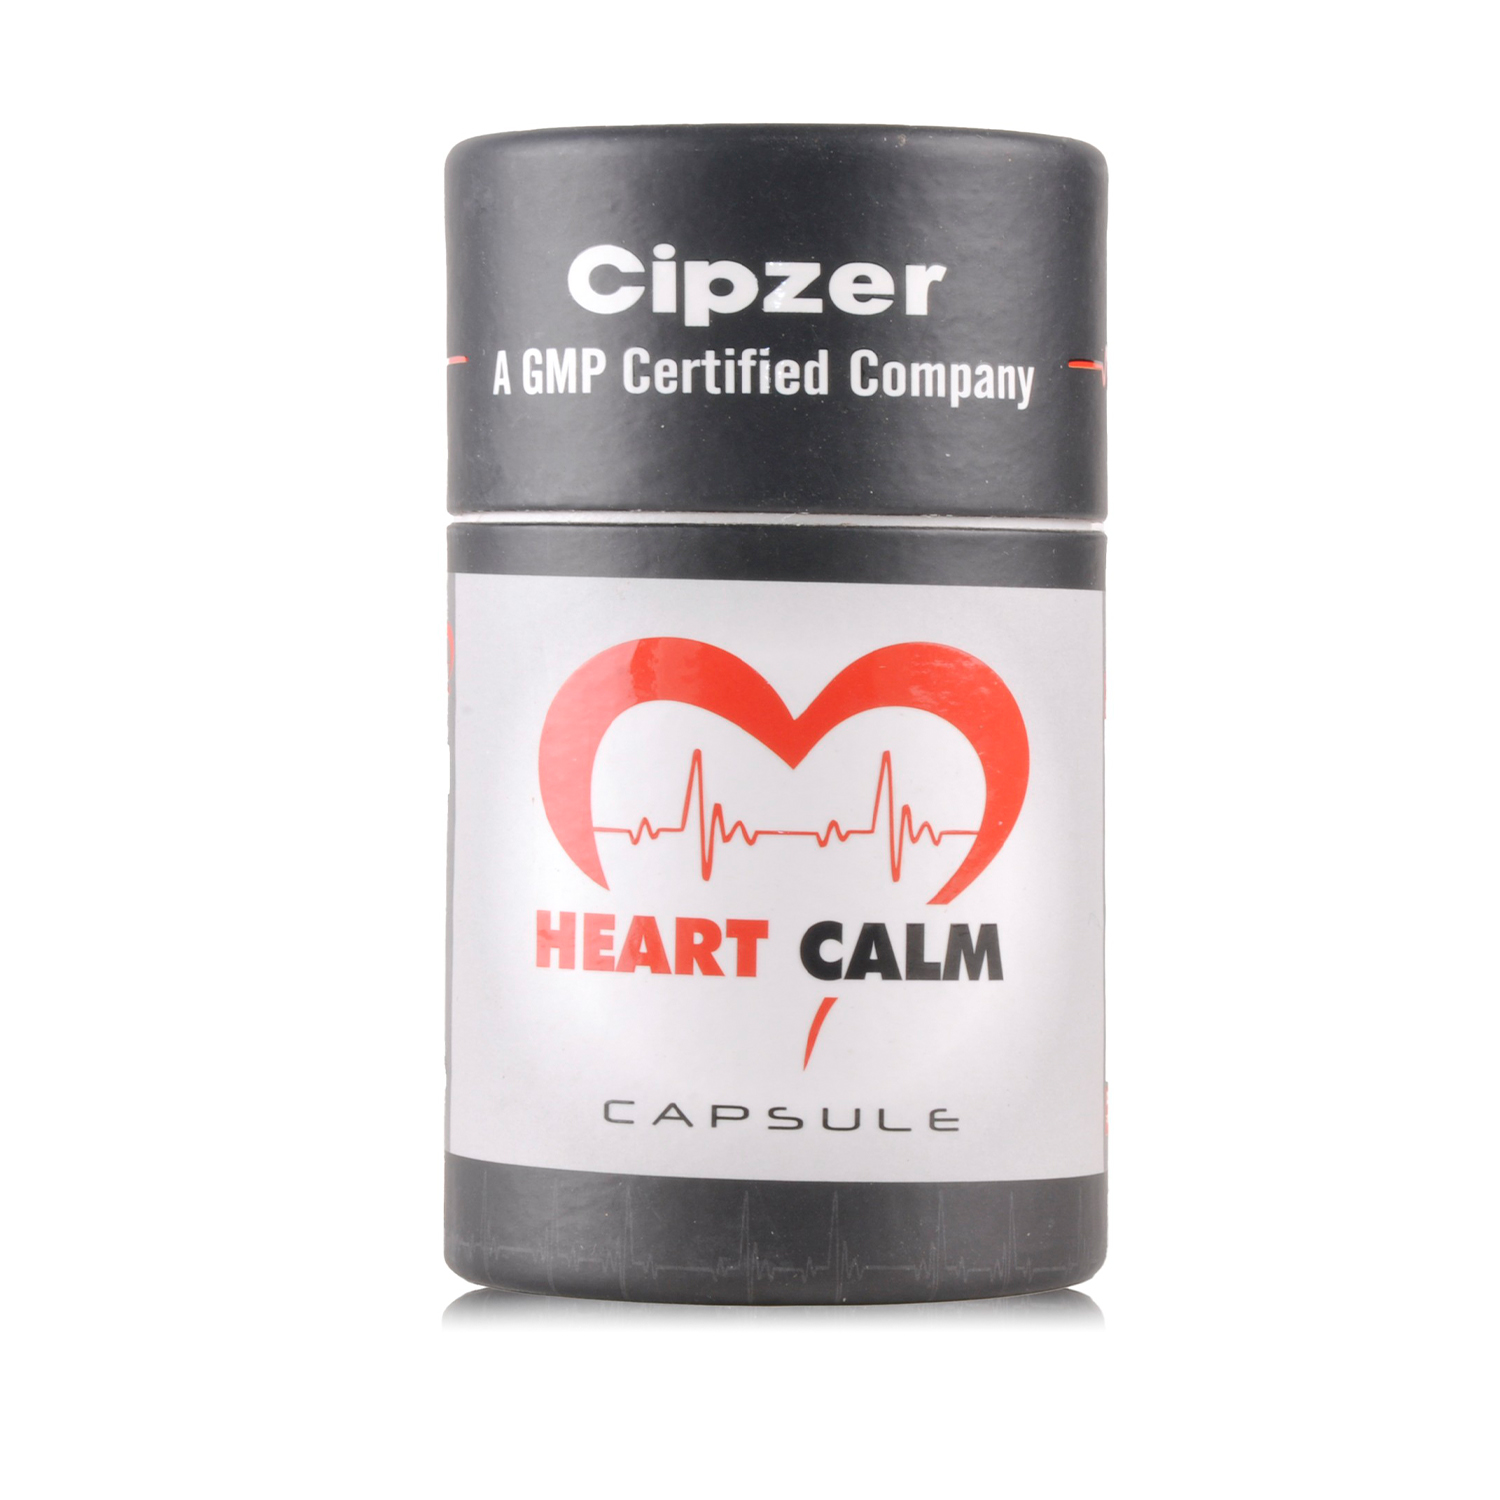 Buy Cipzer Heart Calm Capsule at Best Price Online